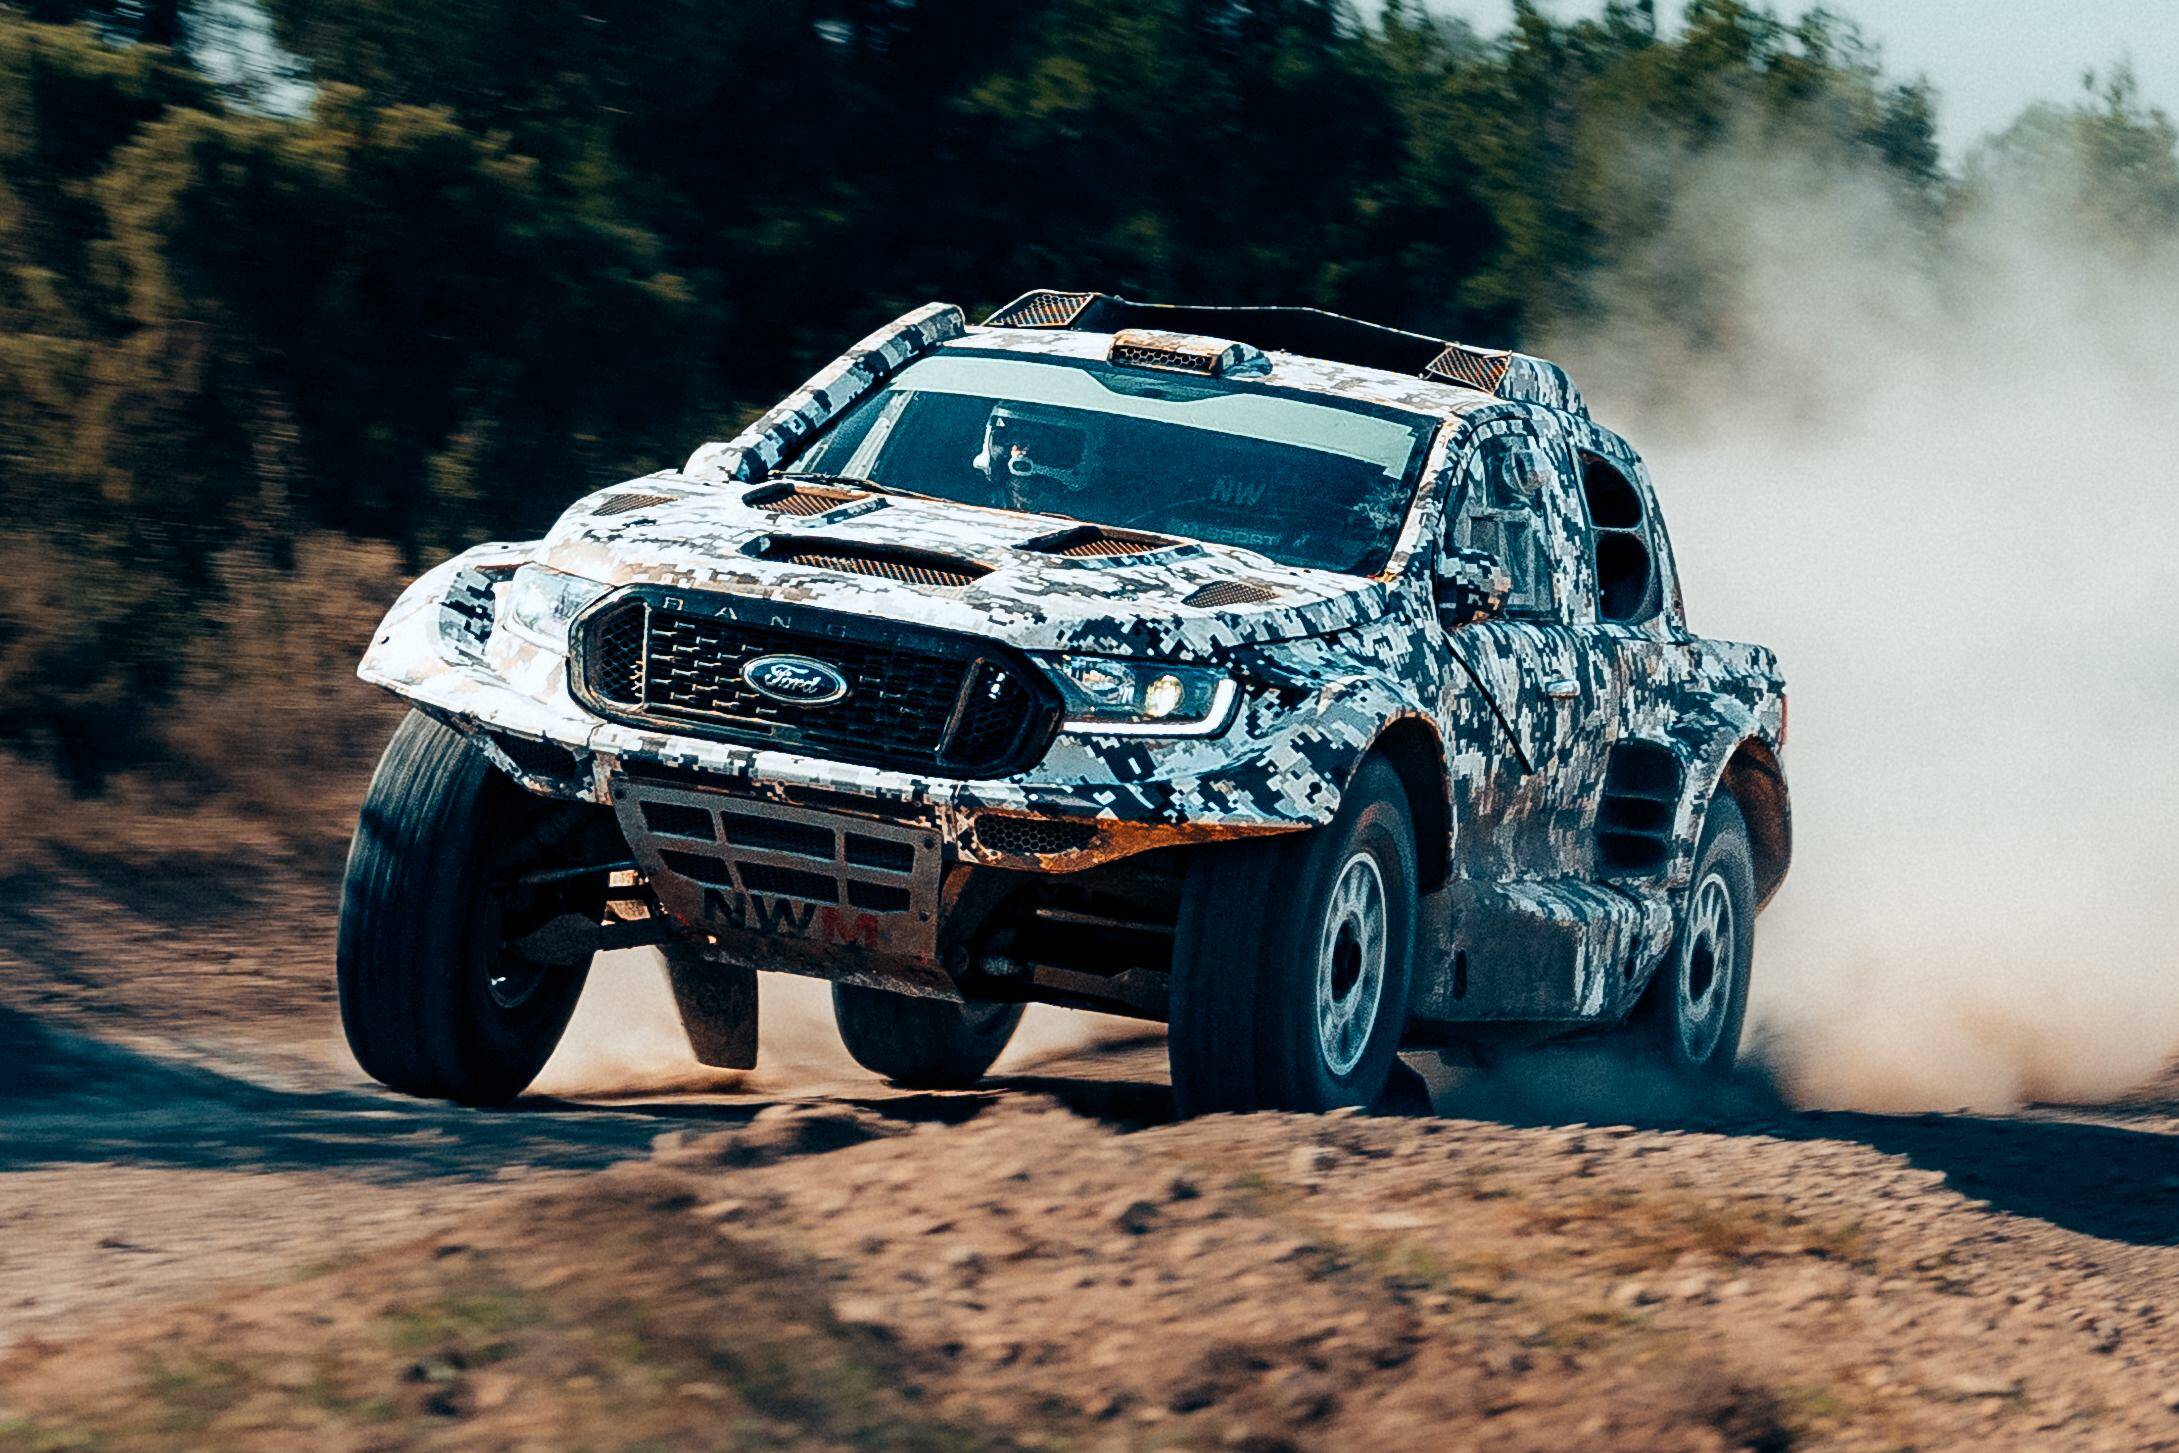 Ford Ranger Raptor testing its mettle at Dakar Rally, The Border Mail